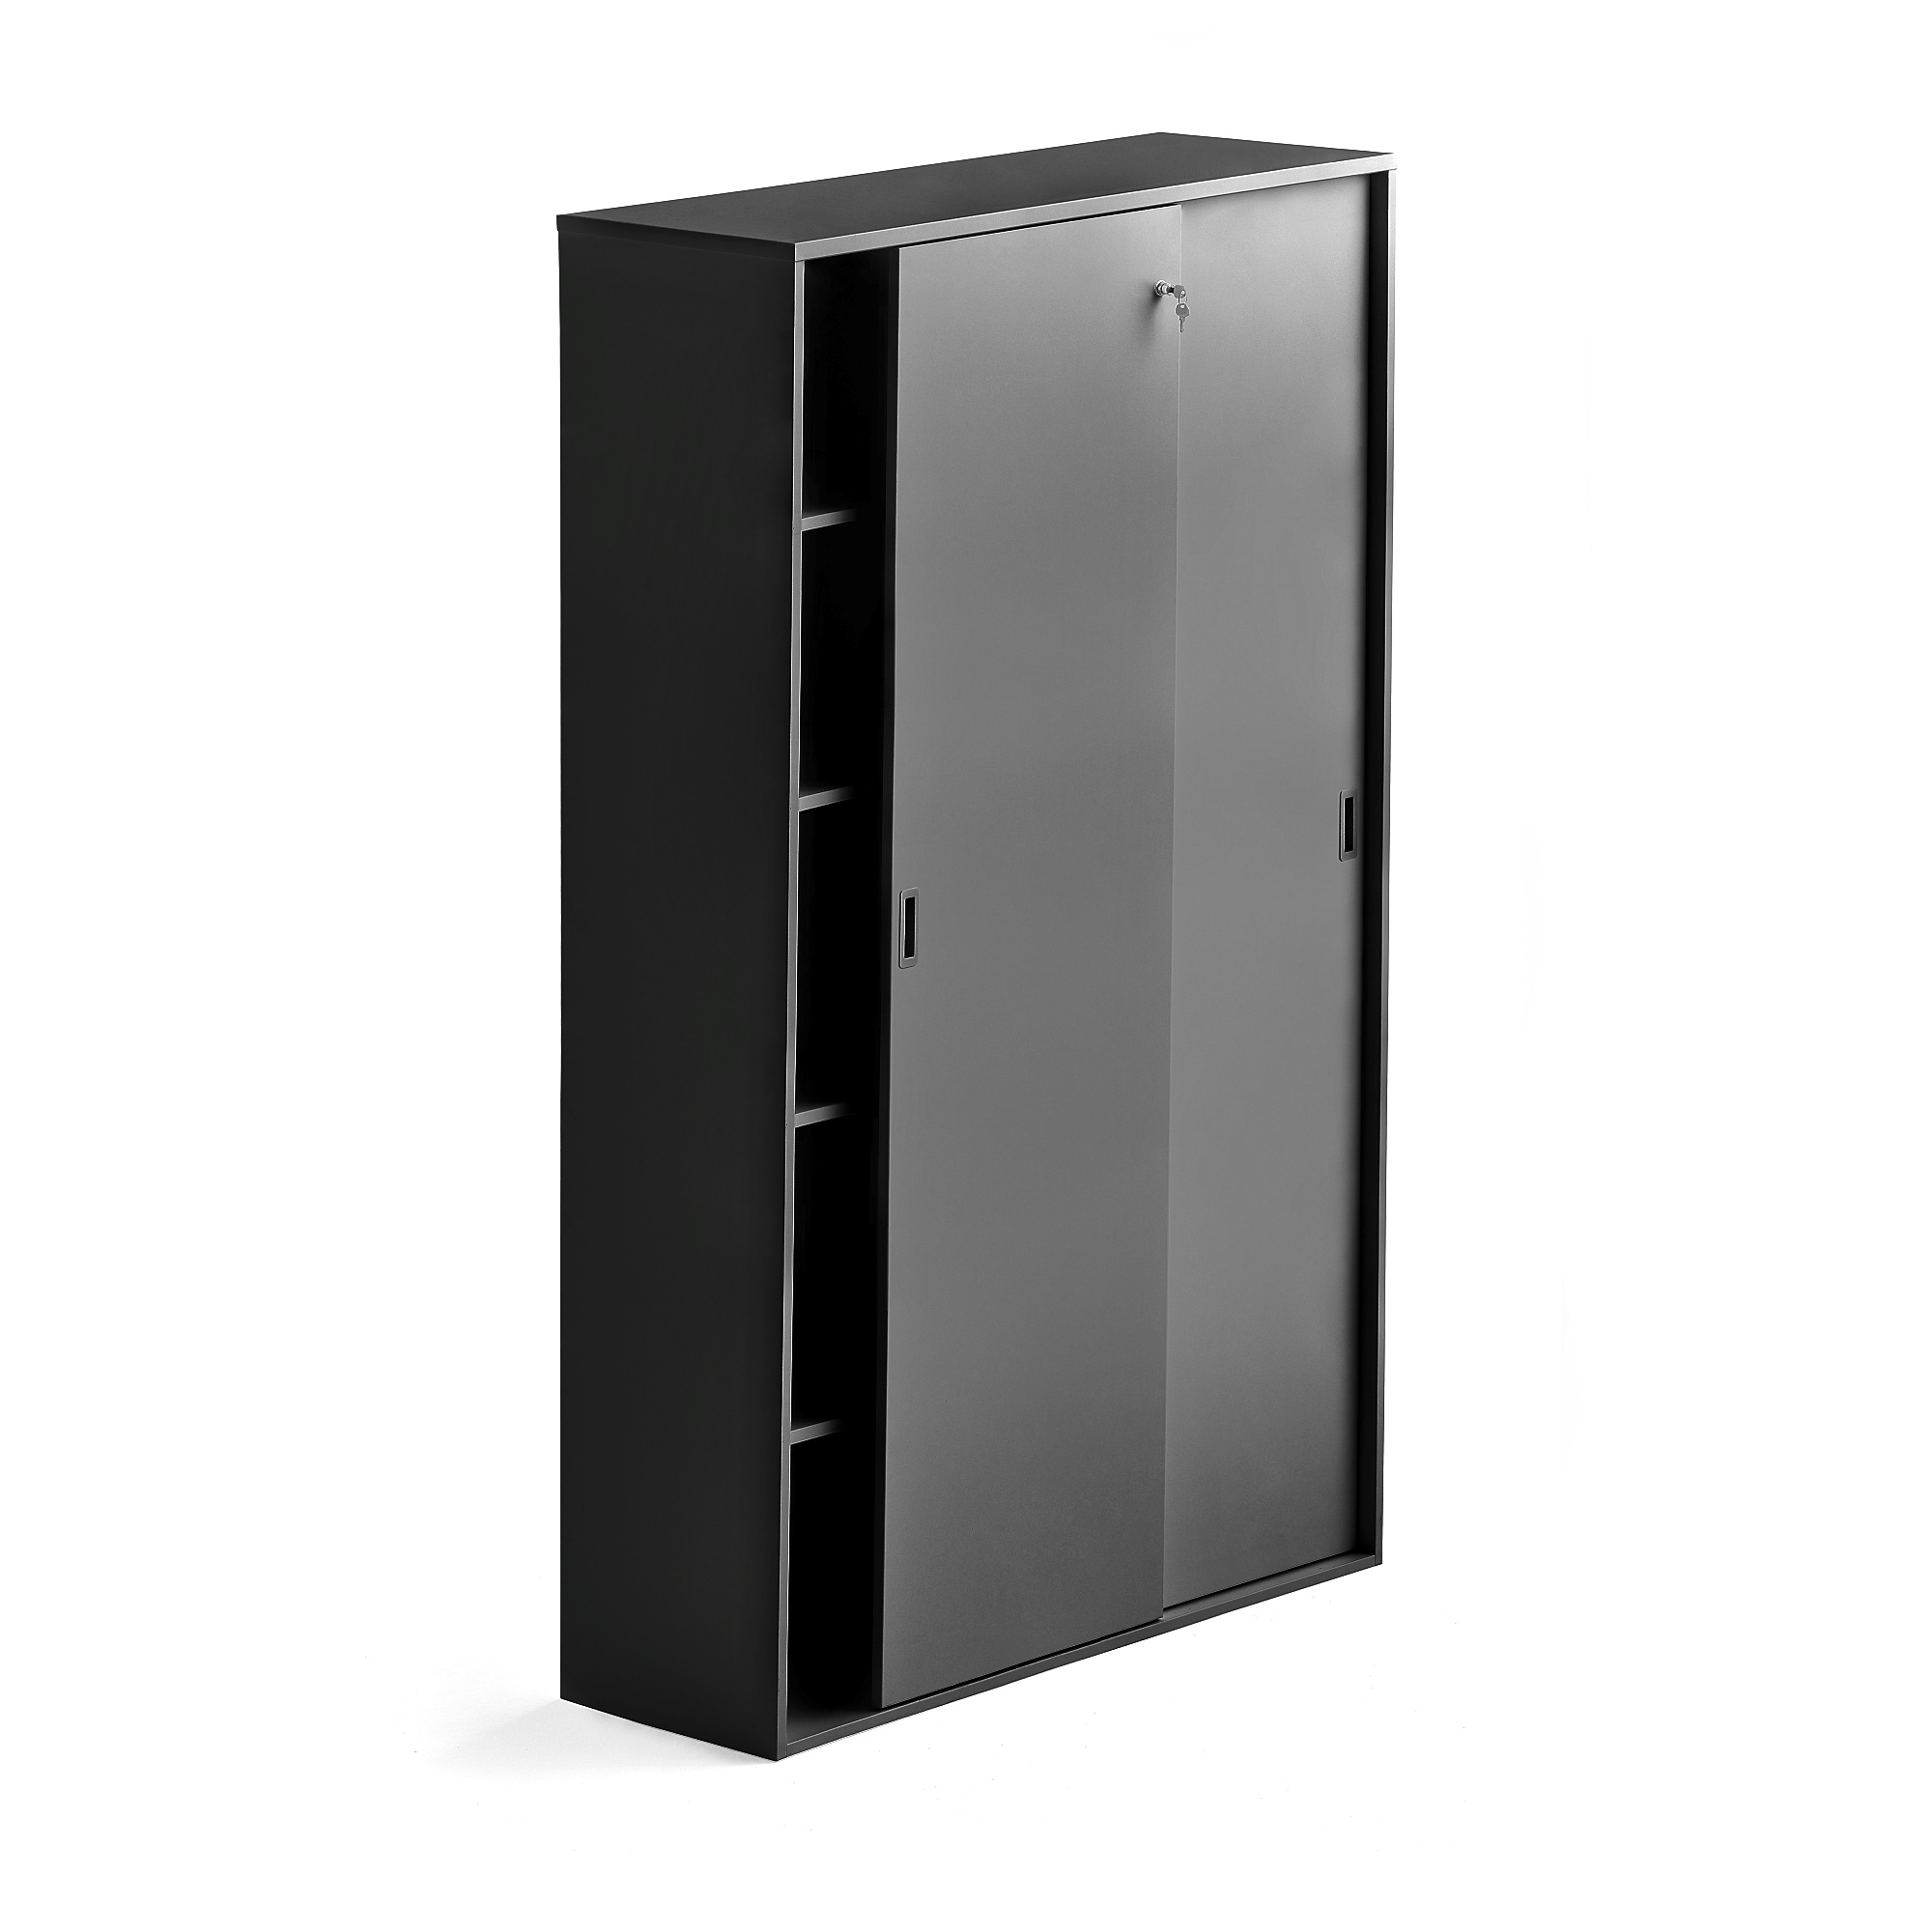 Kancelárska skriňa s posuvnými dverami MODULUS XL, 2000x1200 mm, čierna